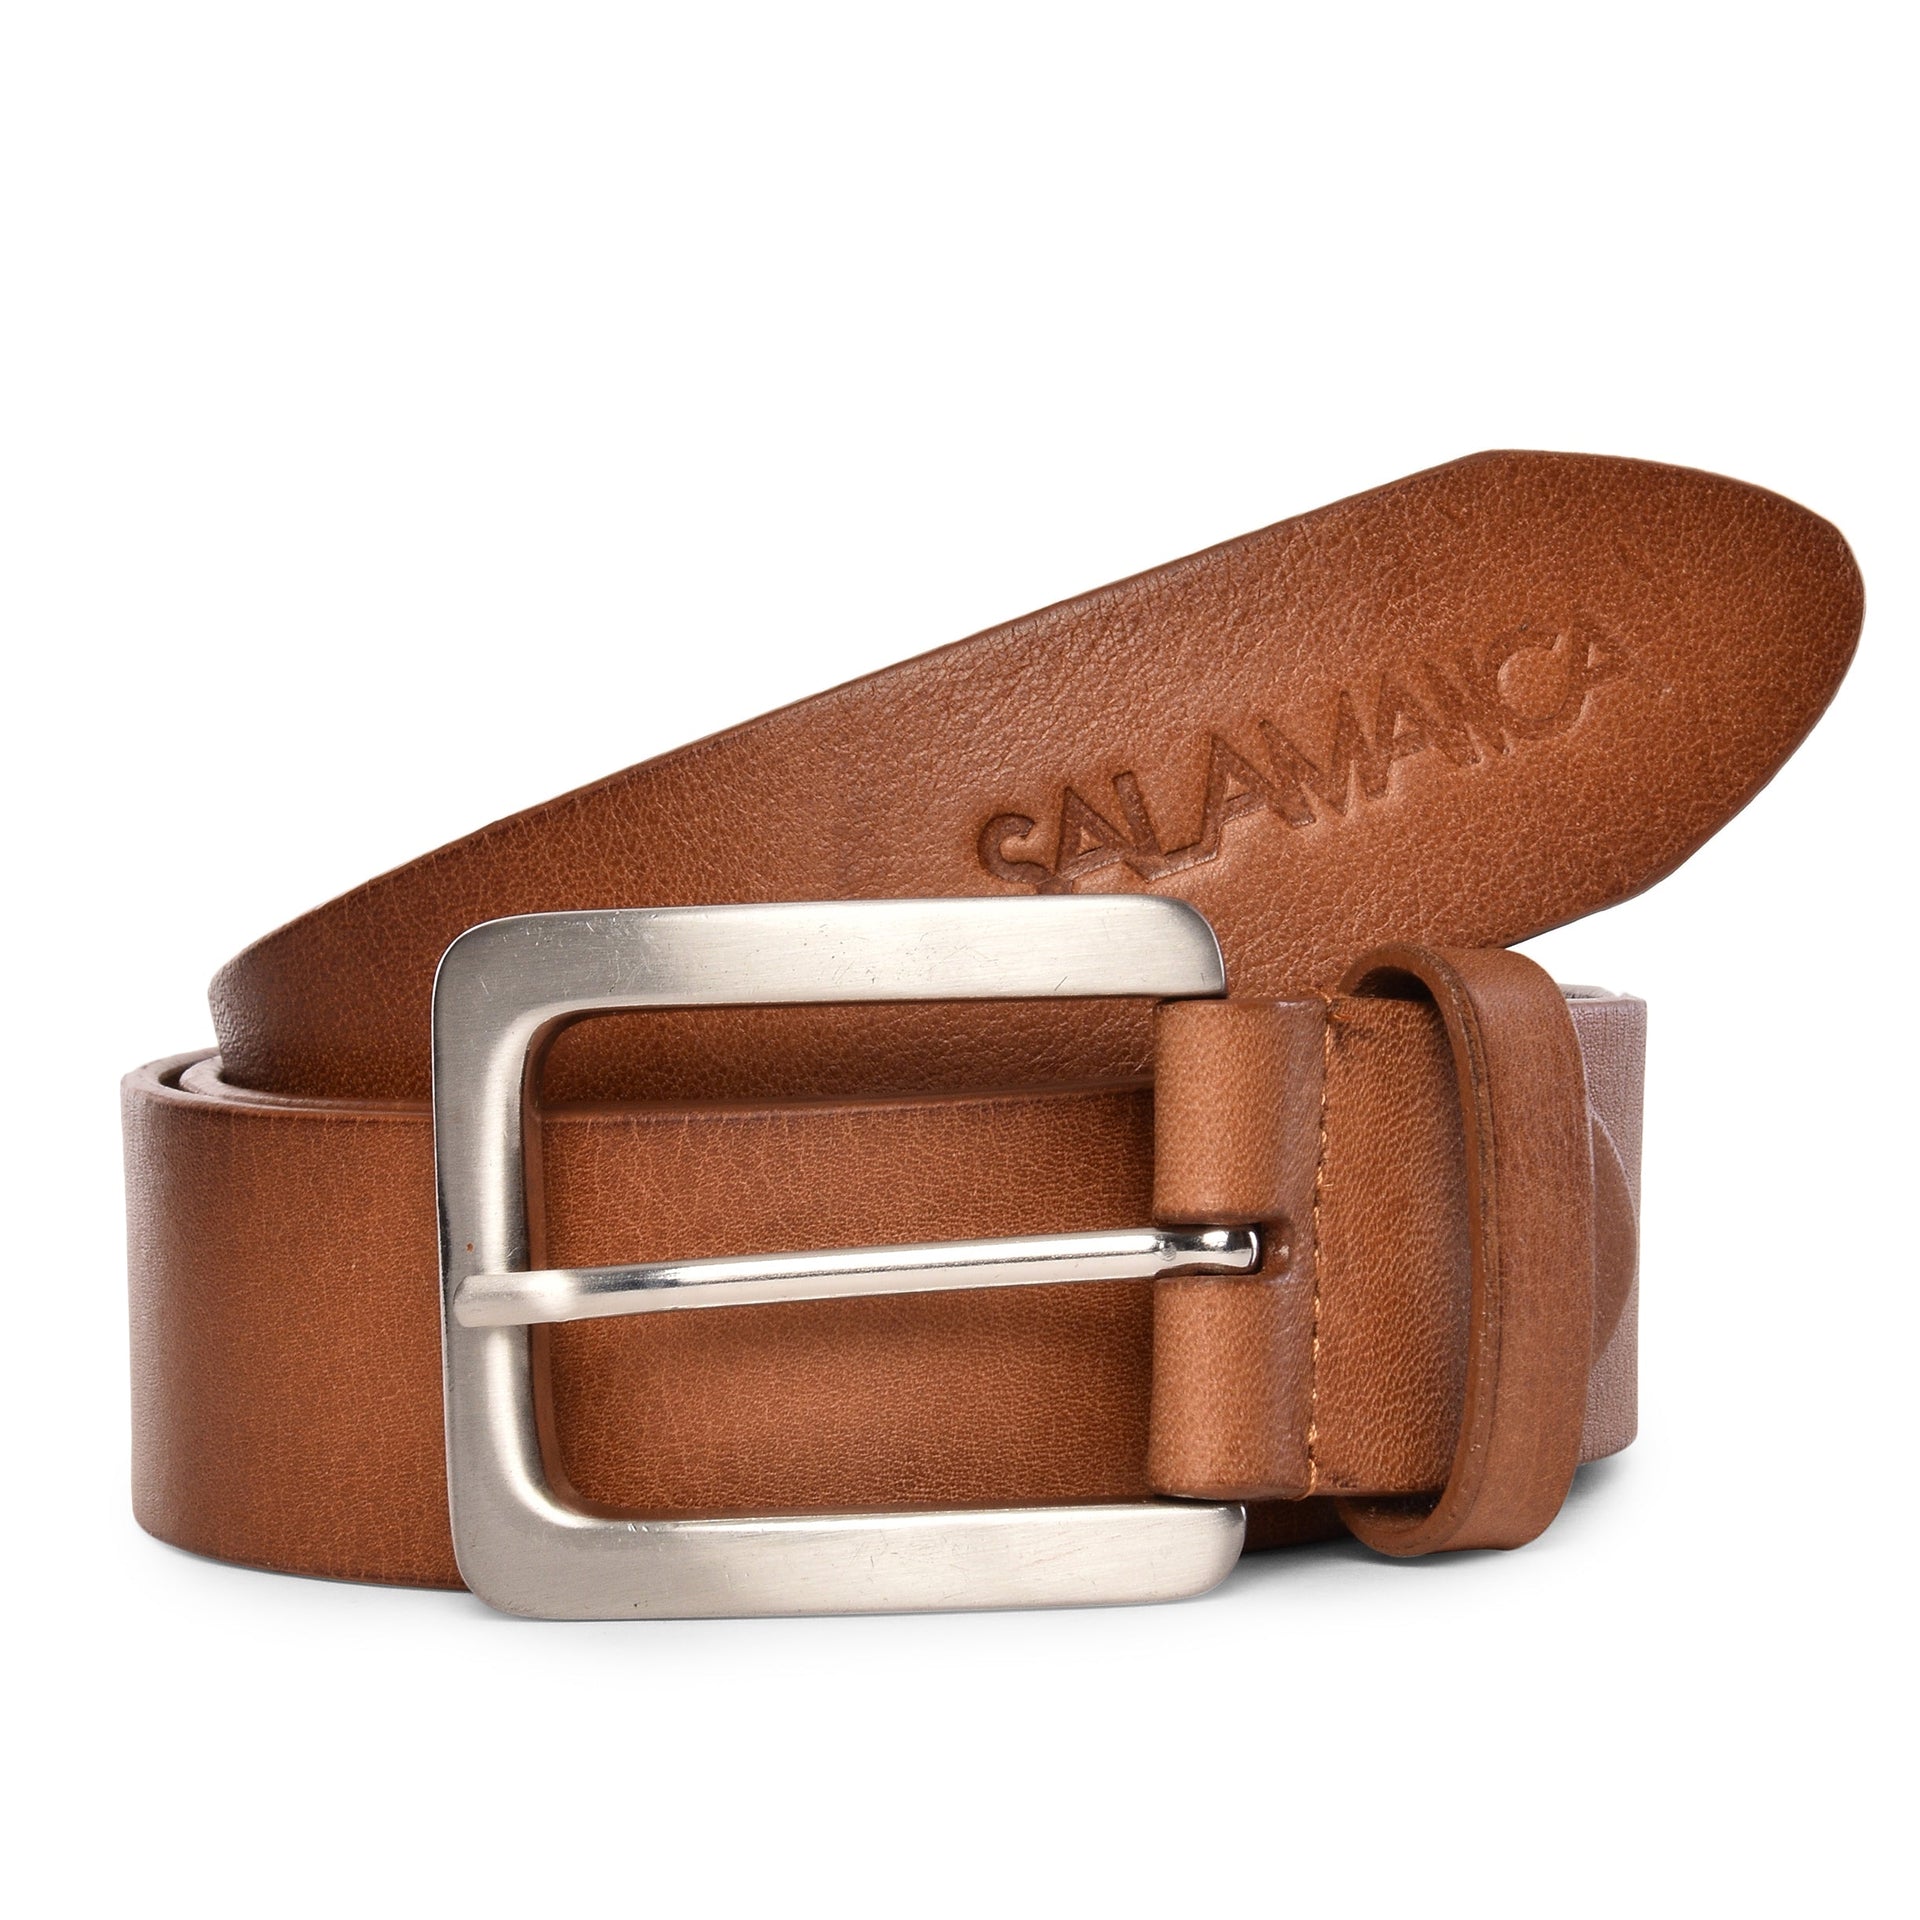 Palma Belt - Light Brown / 30 inch - 75 cm - Belts